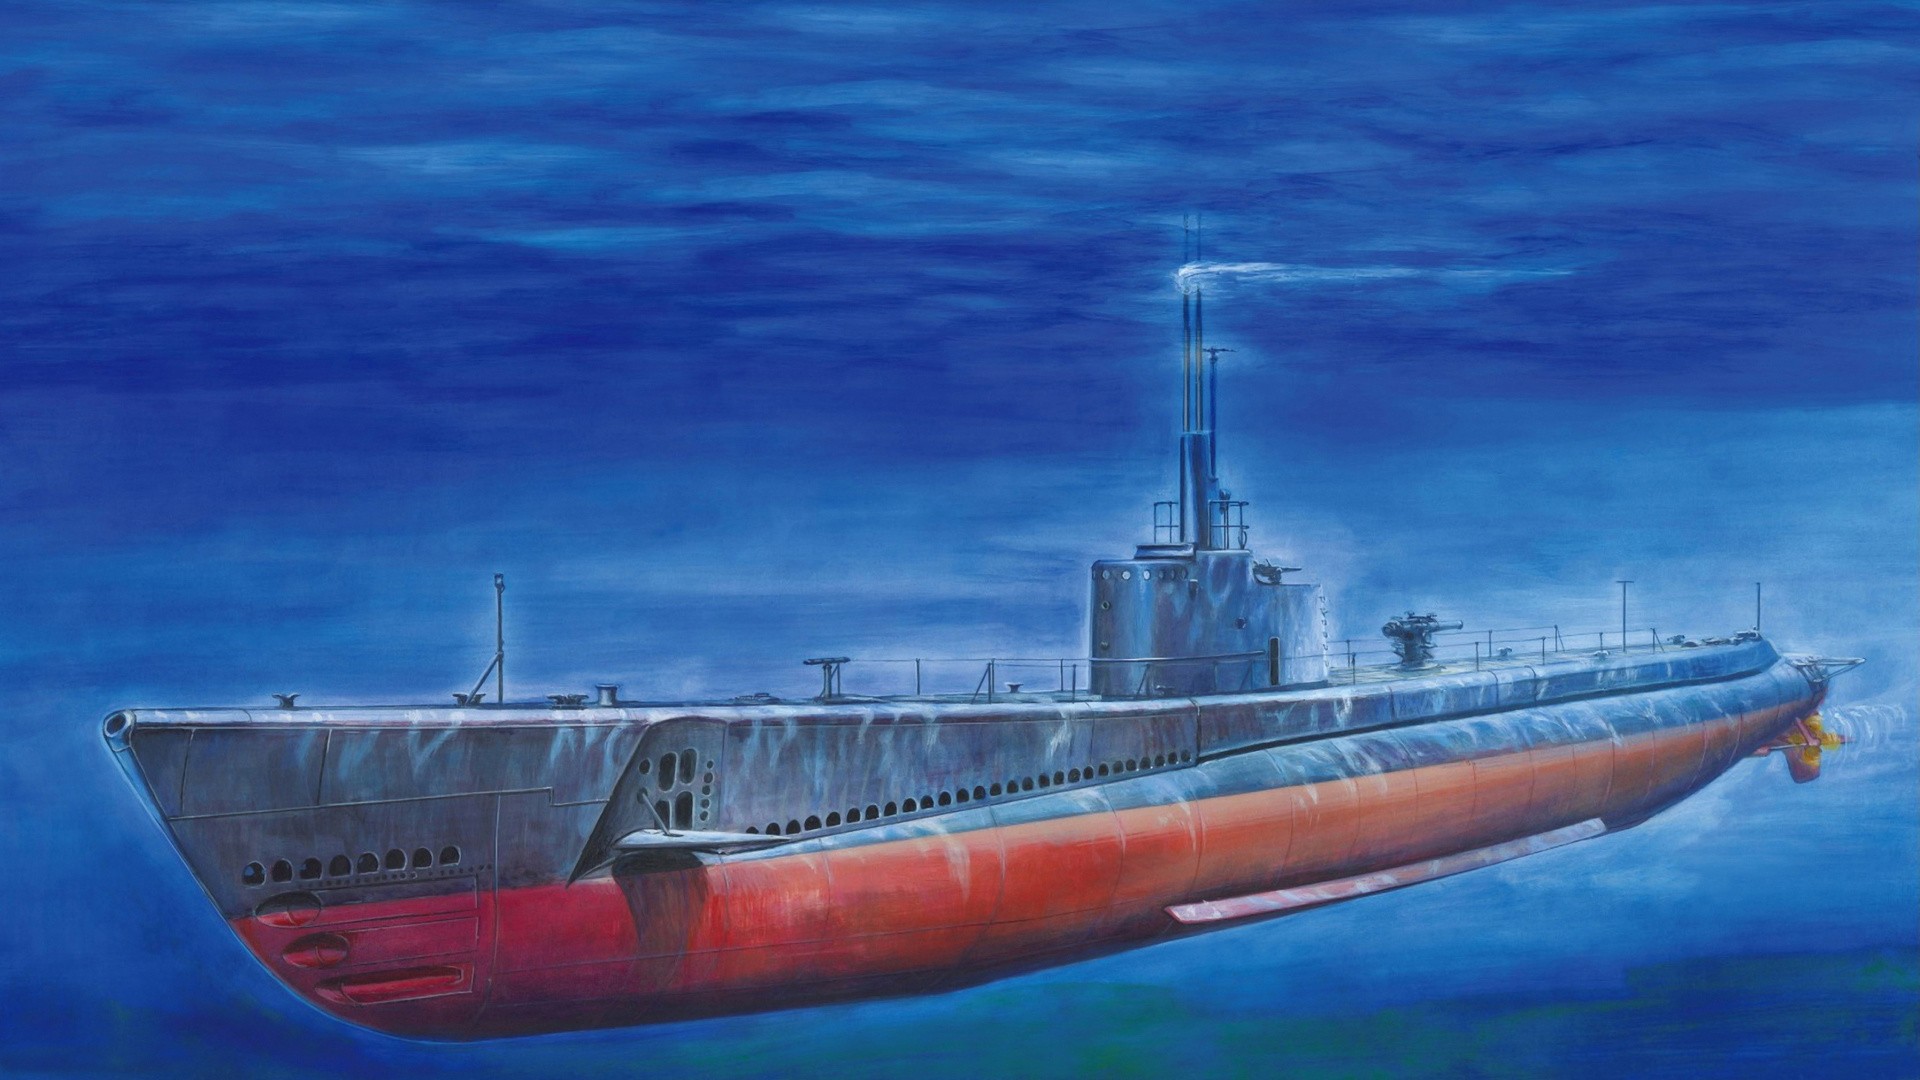 General 1920x1080 vehicle submarine drawing underwater sea USA blue silent hunter military military vehicle boat artwork